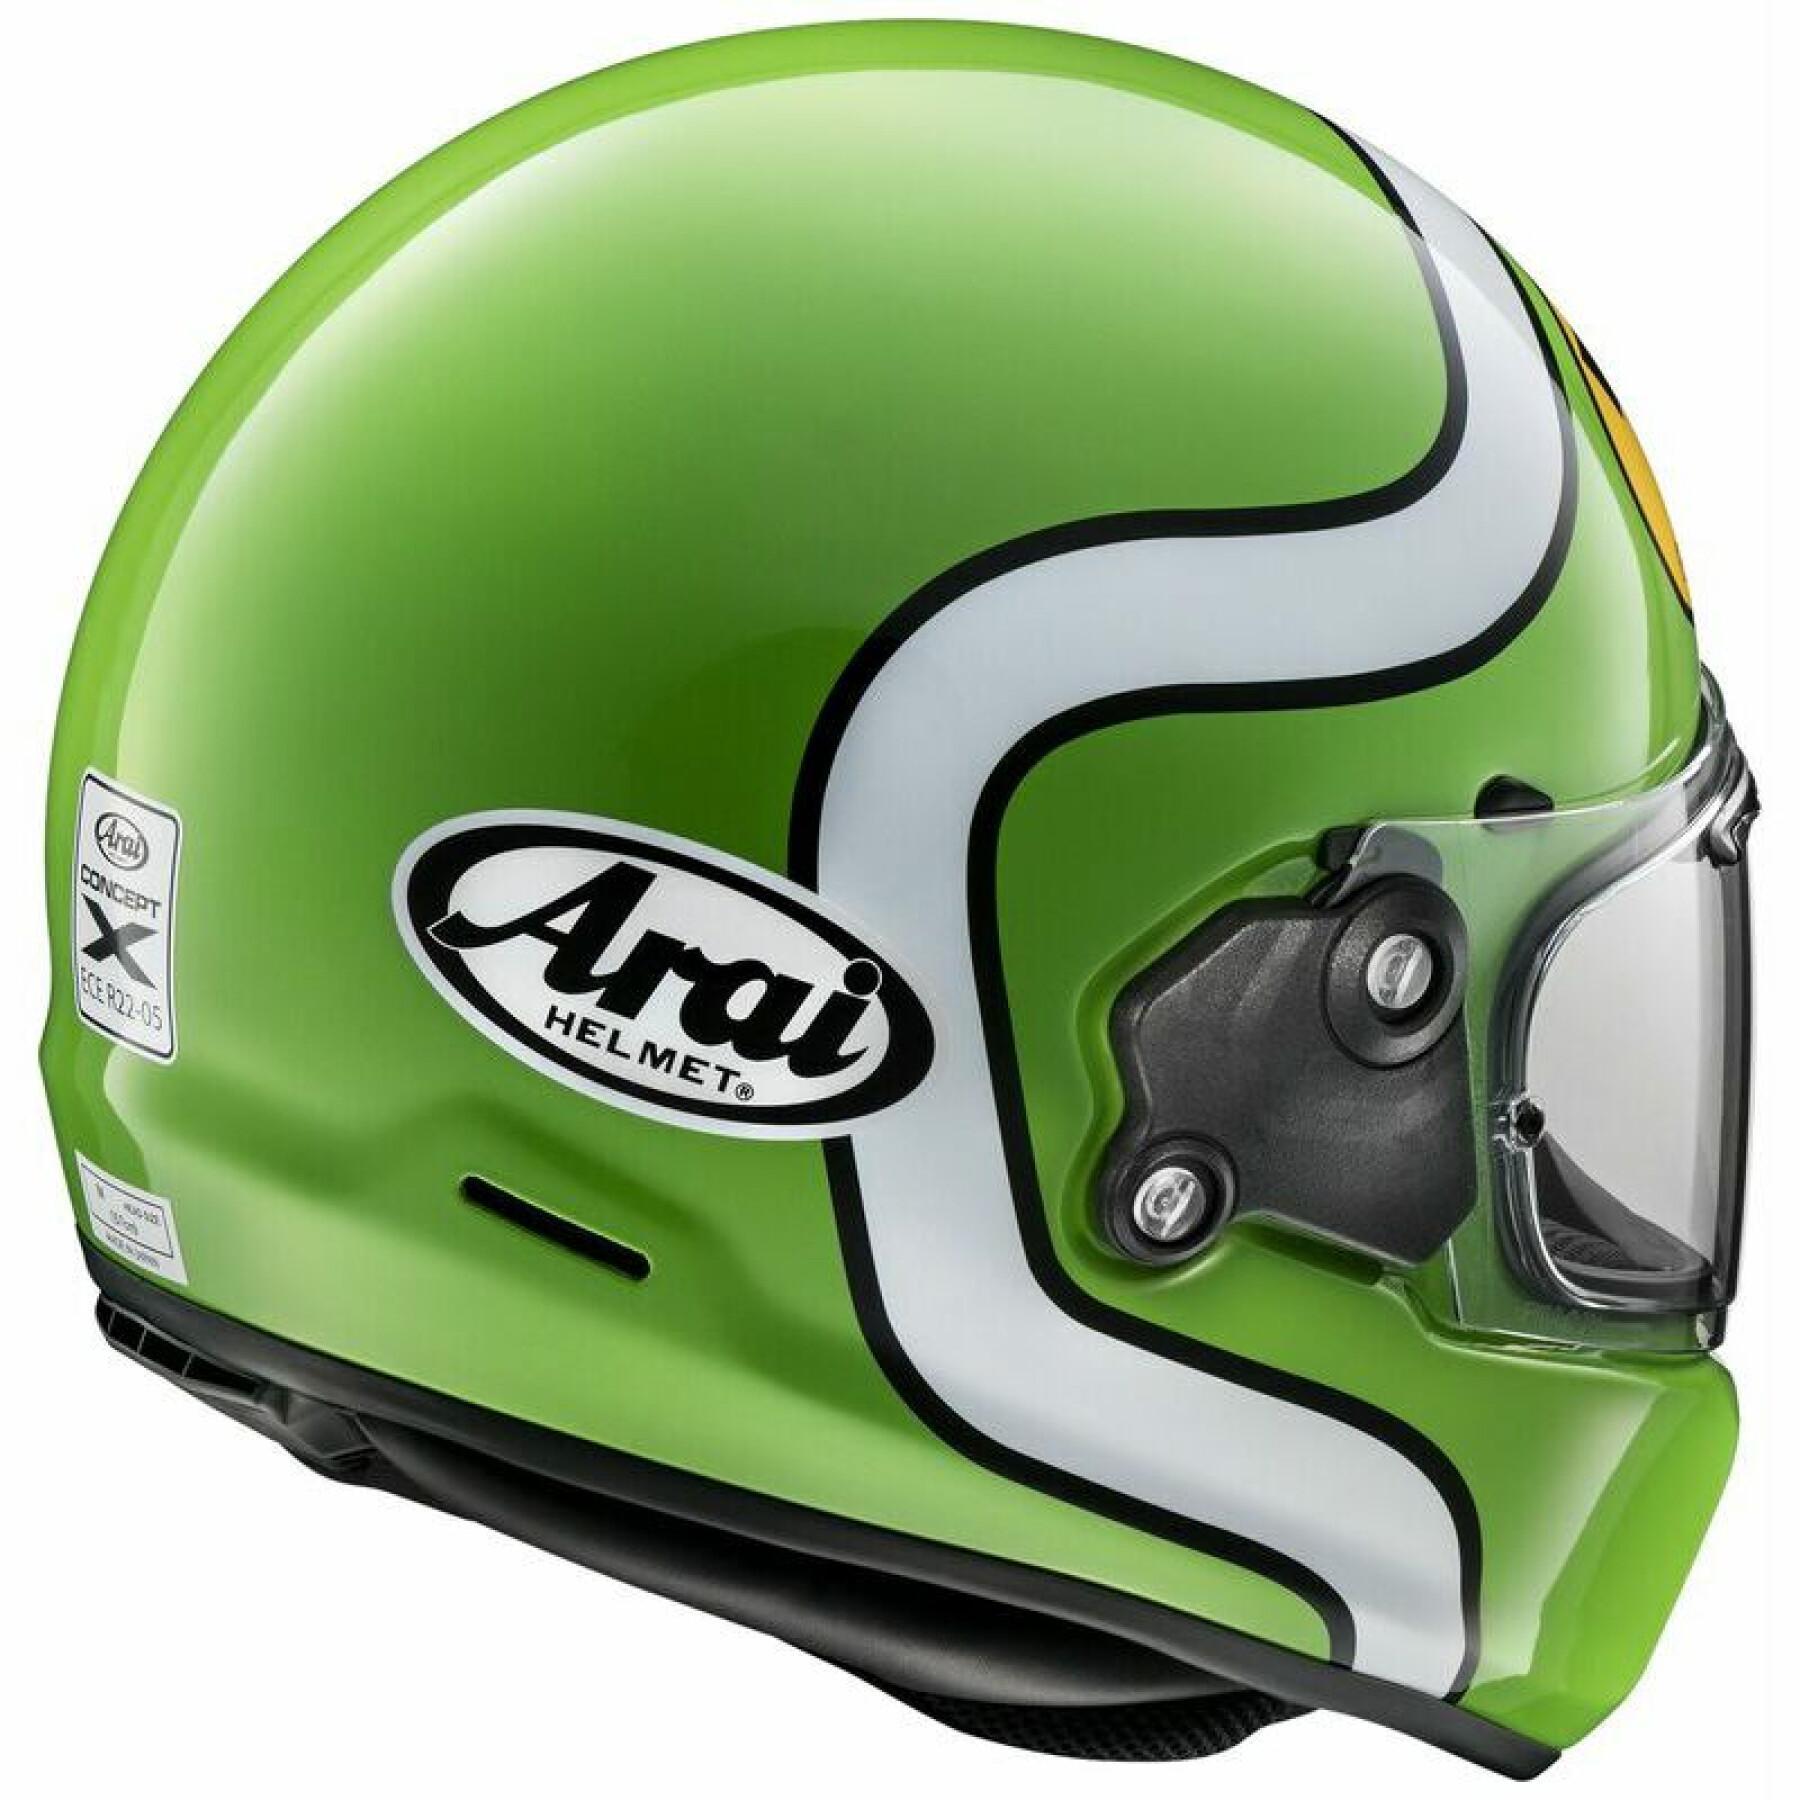 Full face motorcycle helmet Arai Concept-X HA